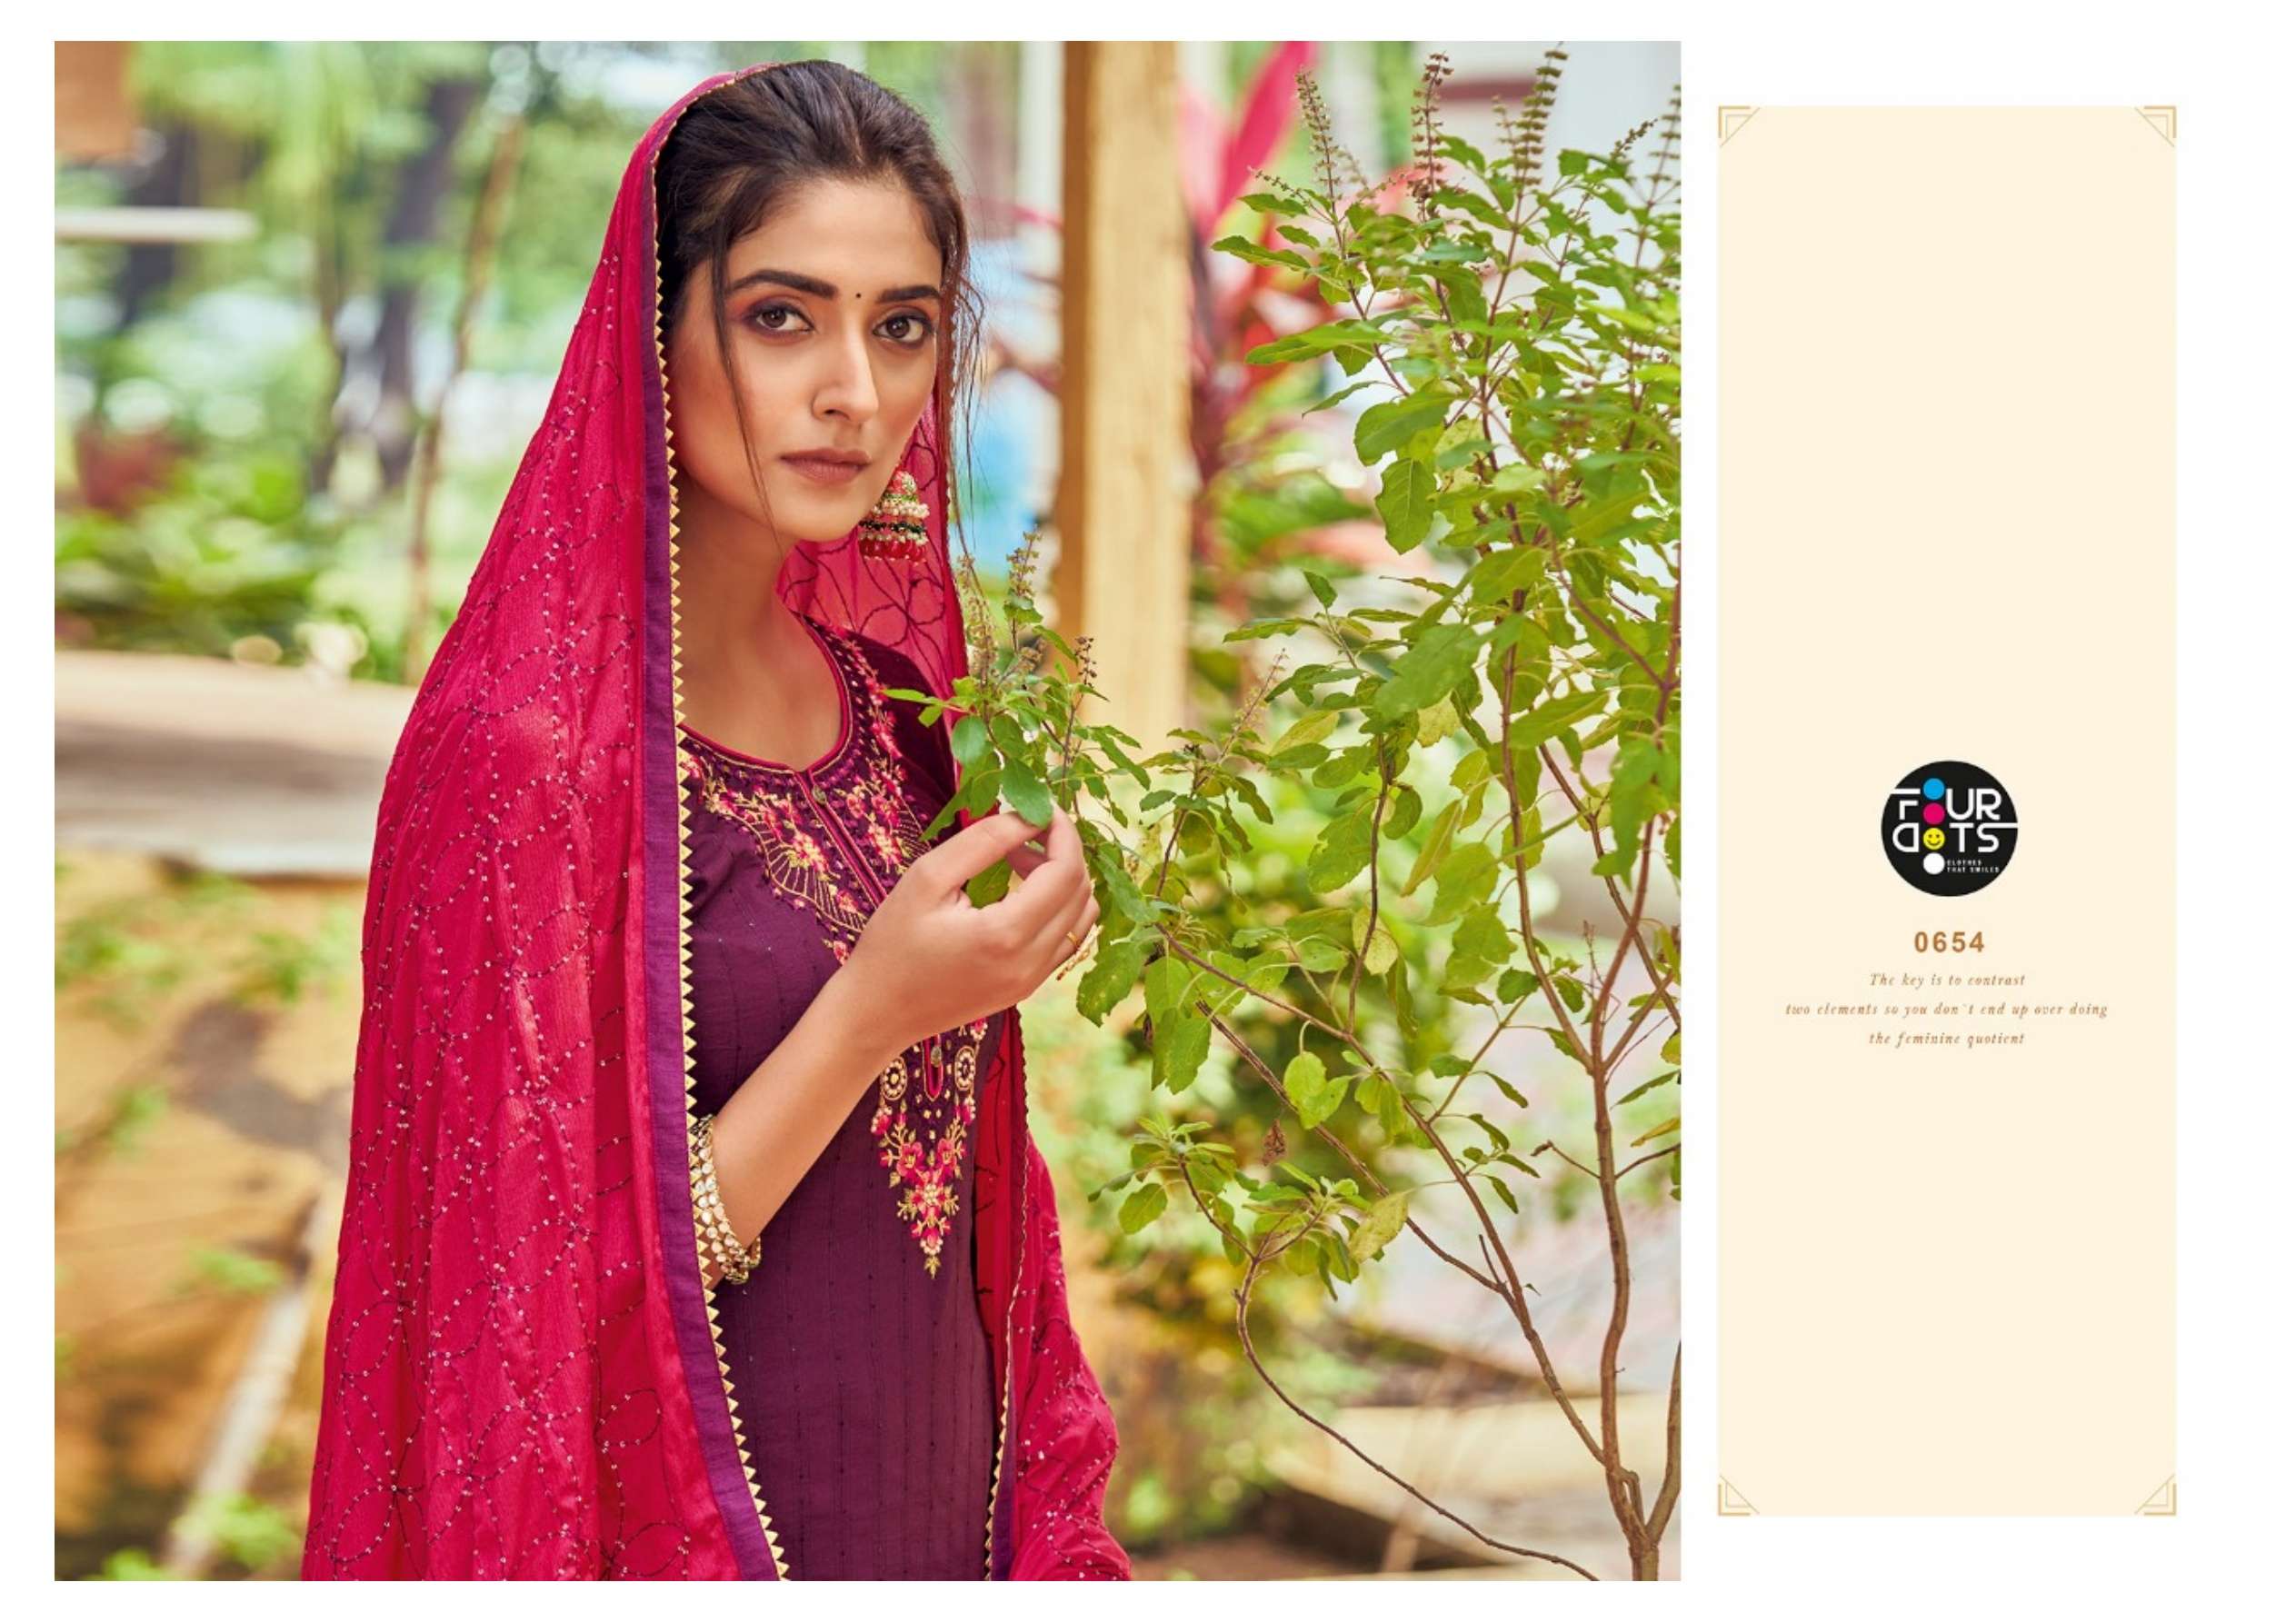 four dots meera stylish designer salwar kameez catalogue wholesale price surat